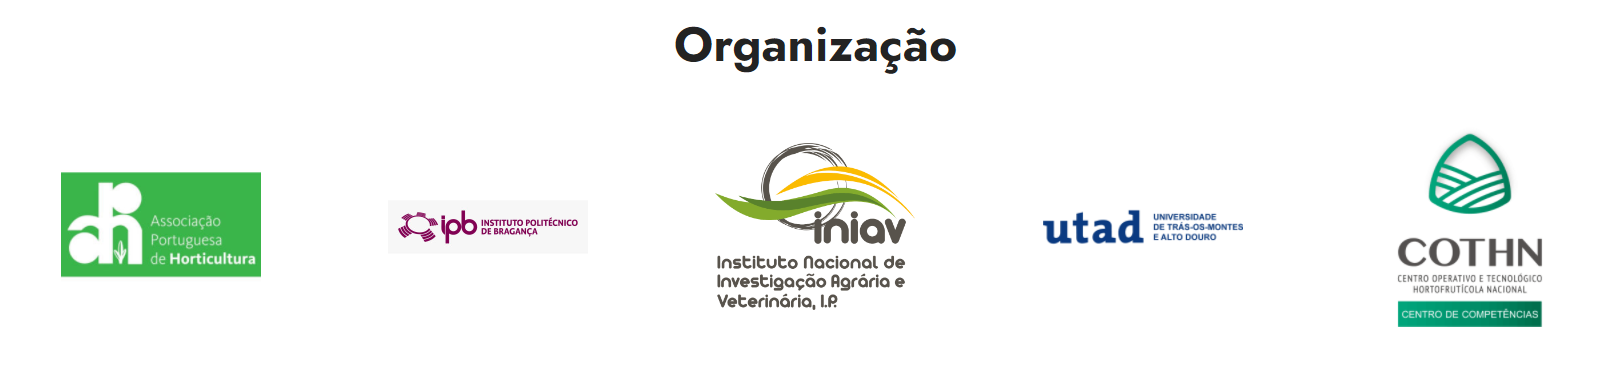 organizacao IX Simposio Nacional de Olivicultura